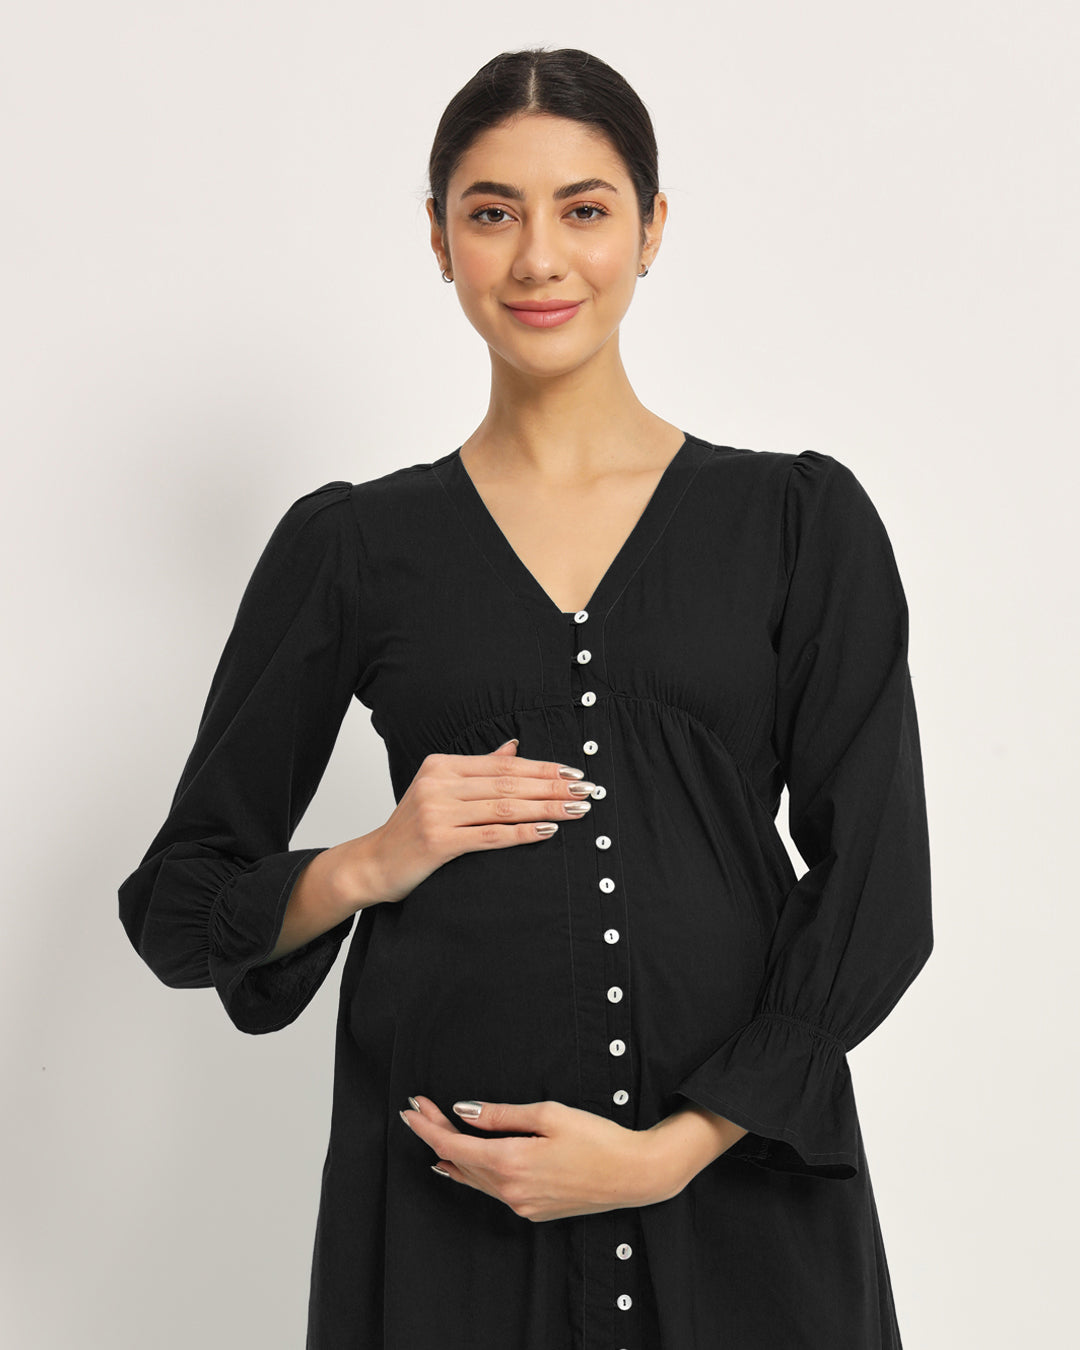 Classic Black Glowing Bellies Maternity & Nursing Dress